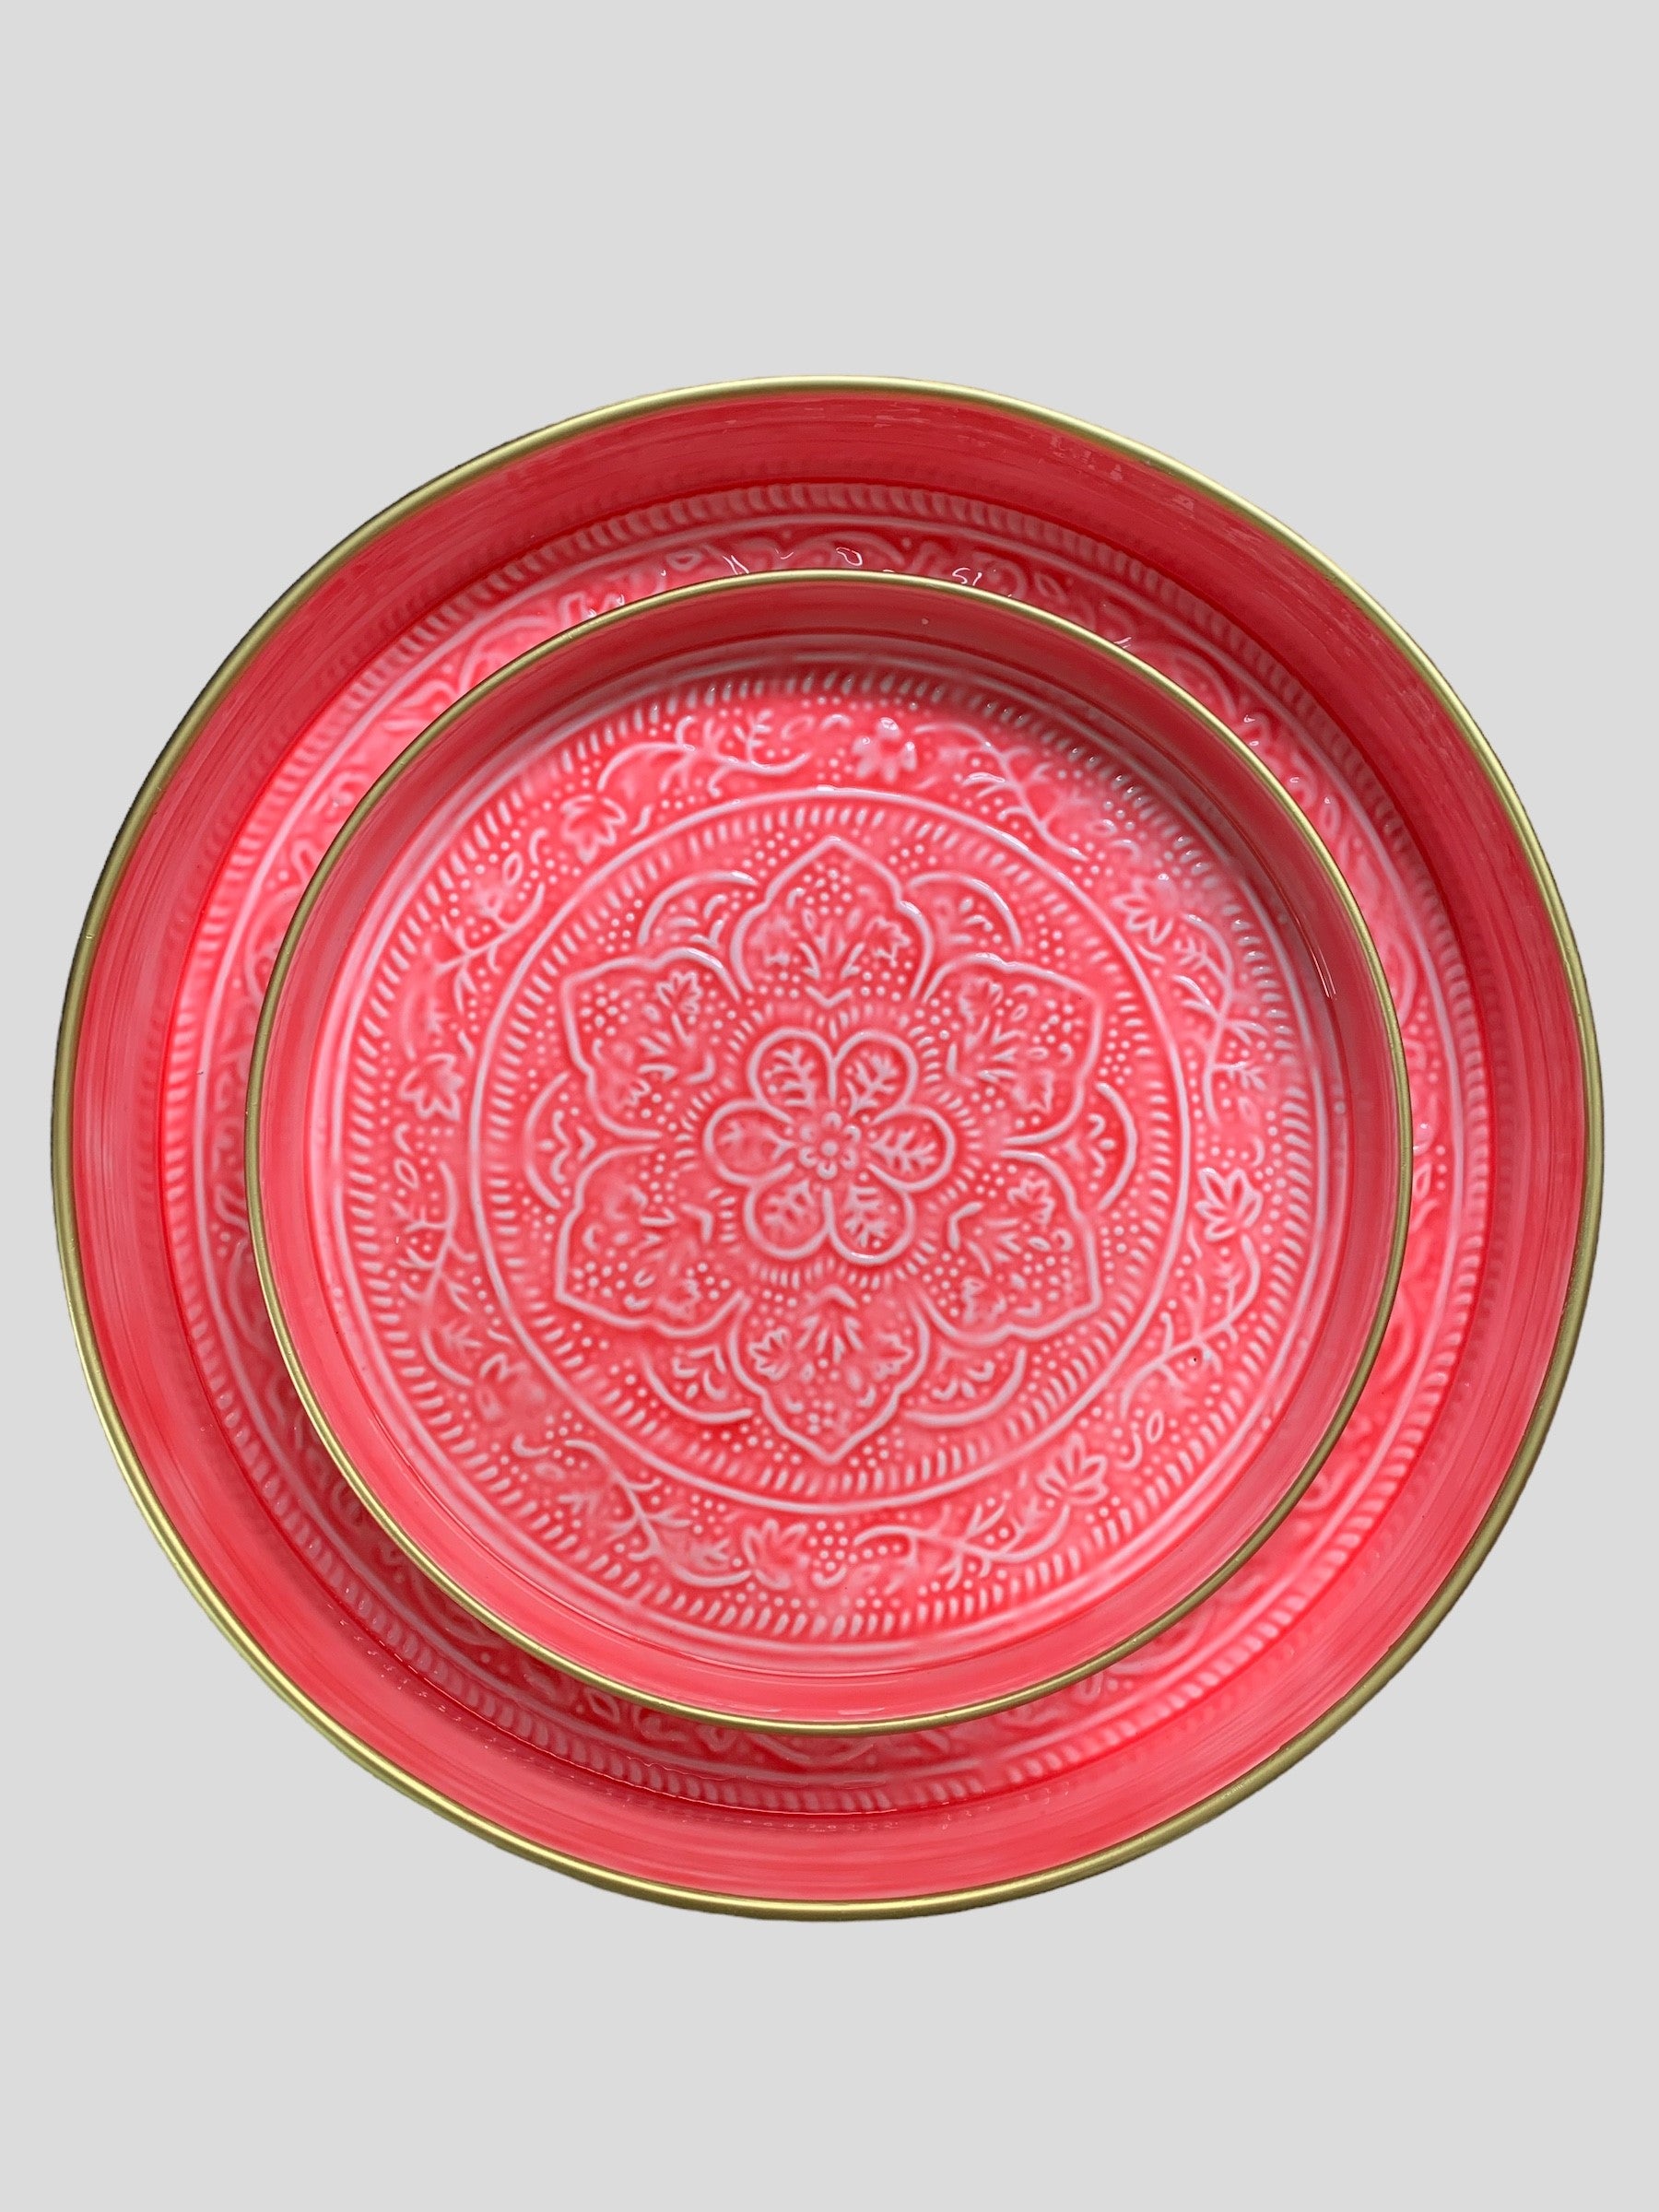 A medium enamel bright pink tray inside a larger tray.